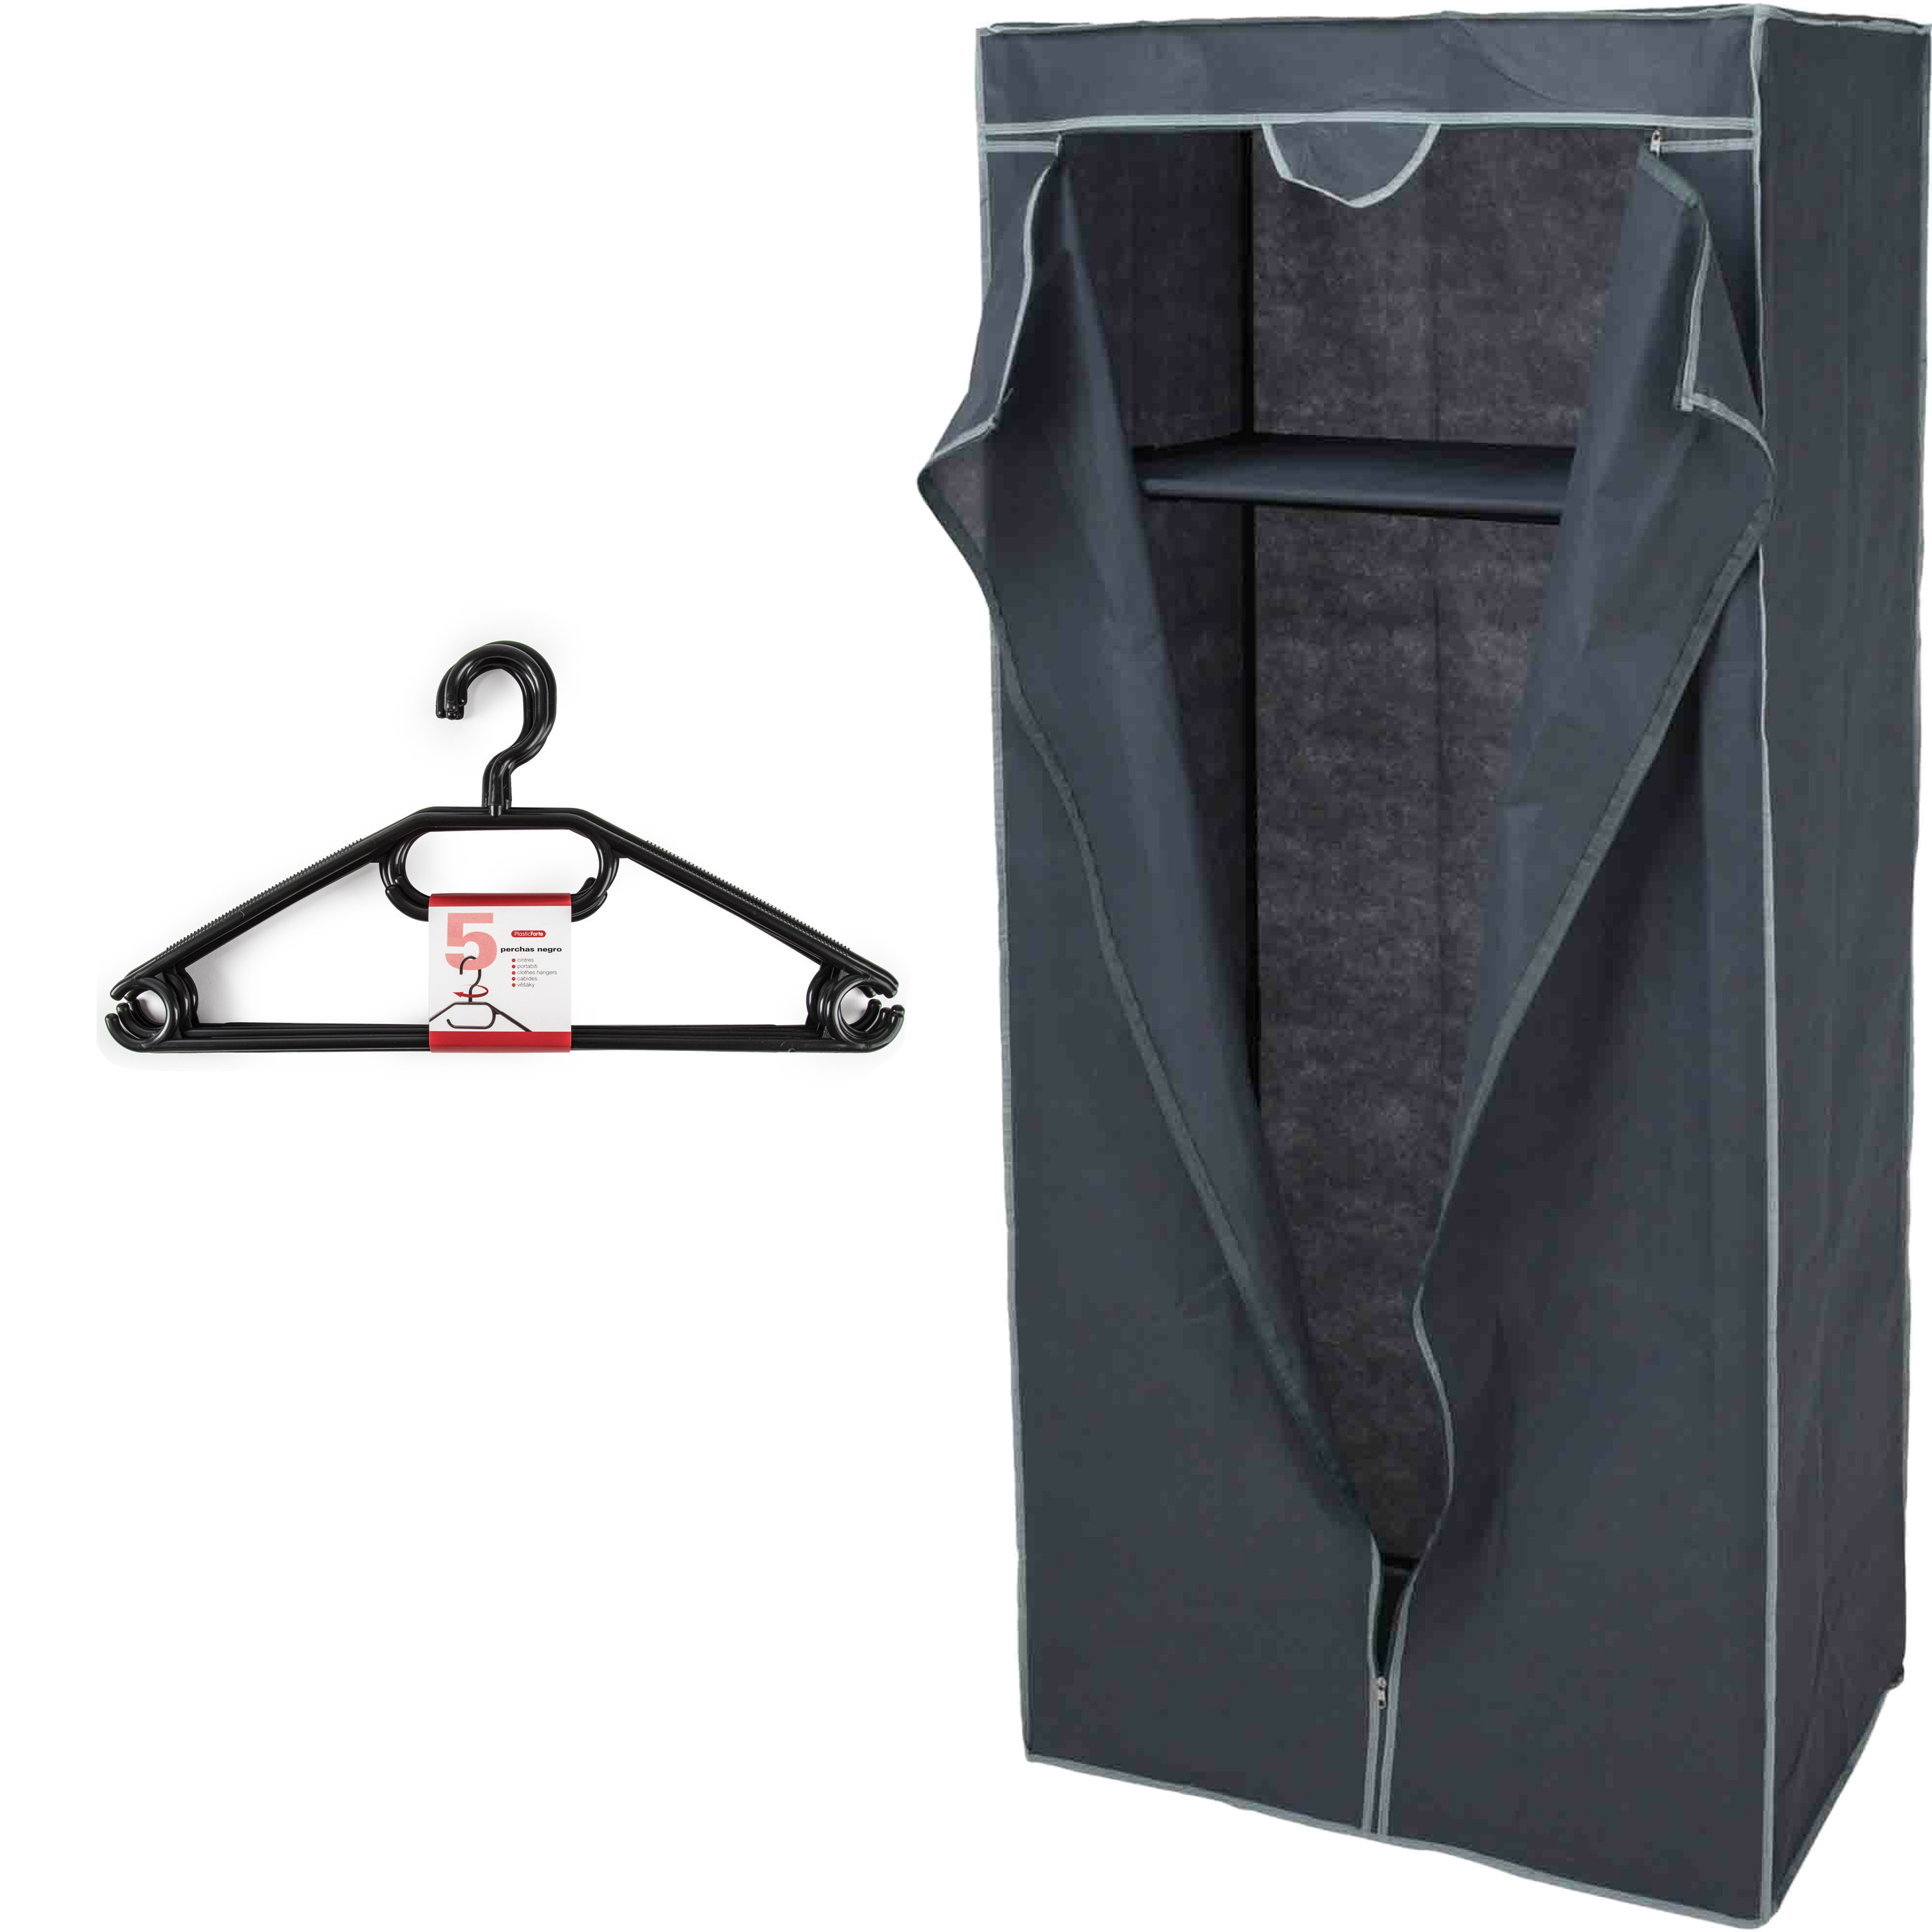 Mobiele opvouwbare kledingkast grijs 75 x 160 cm met 10x kledinghangers zwart